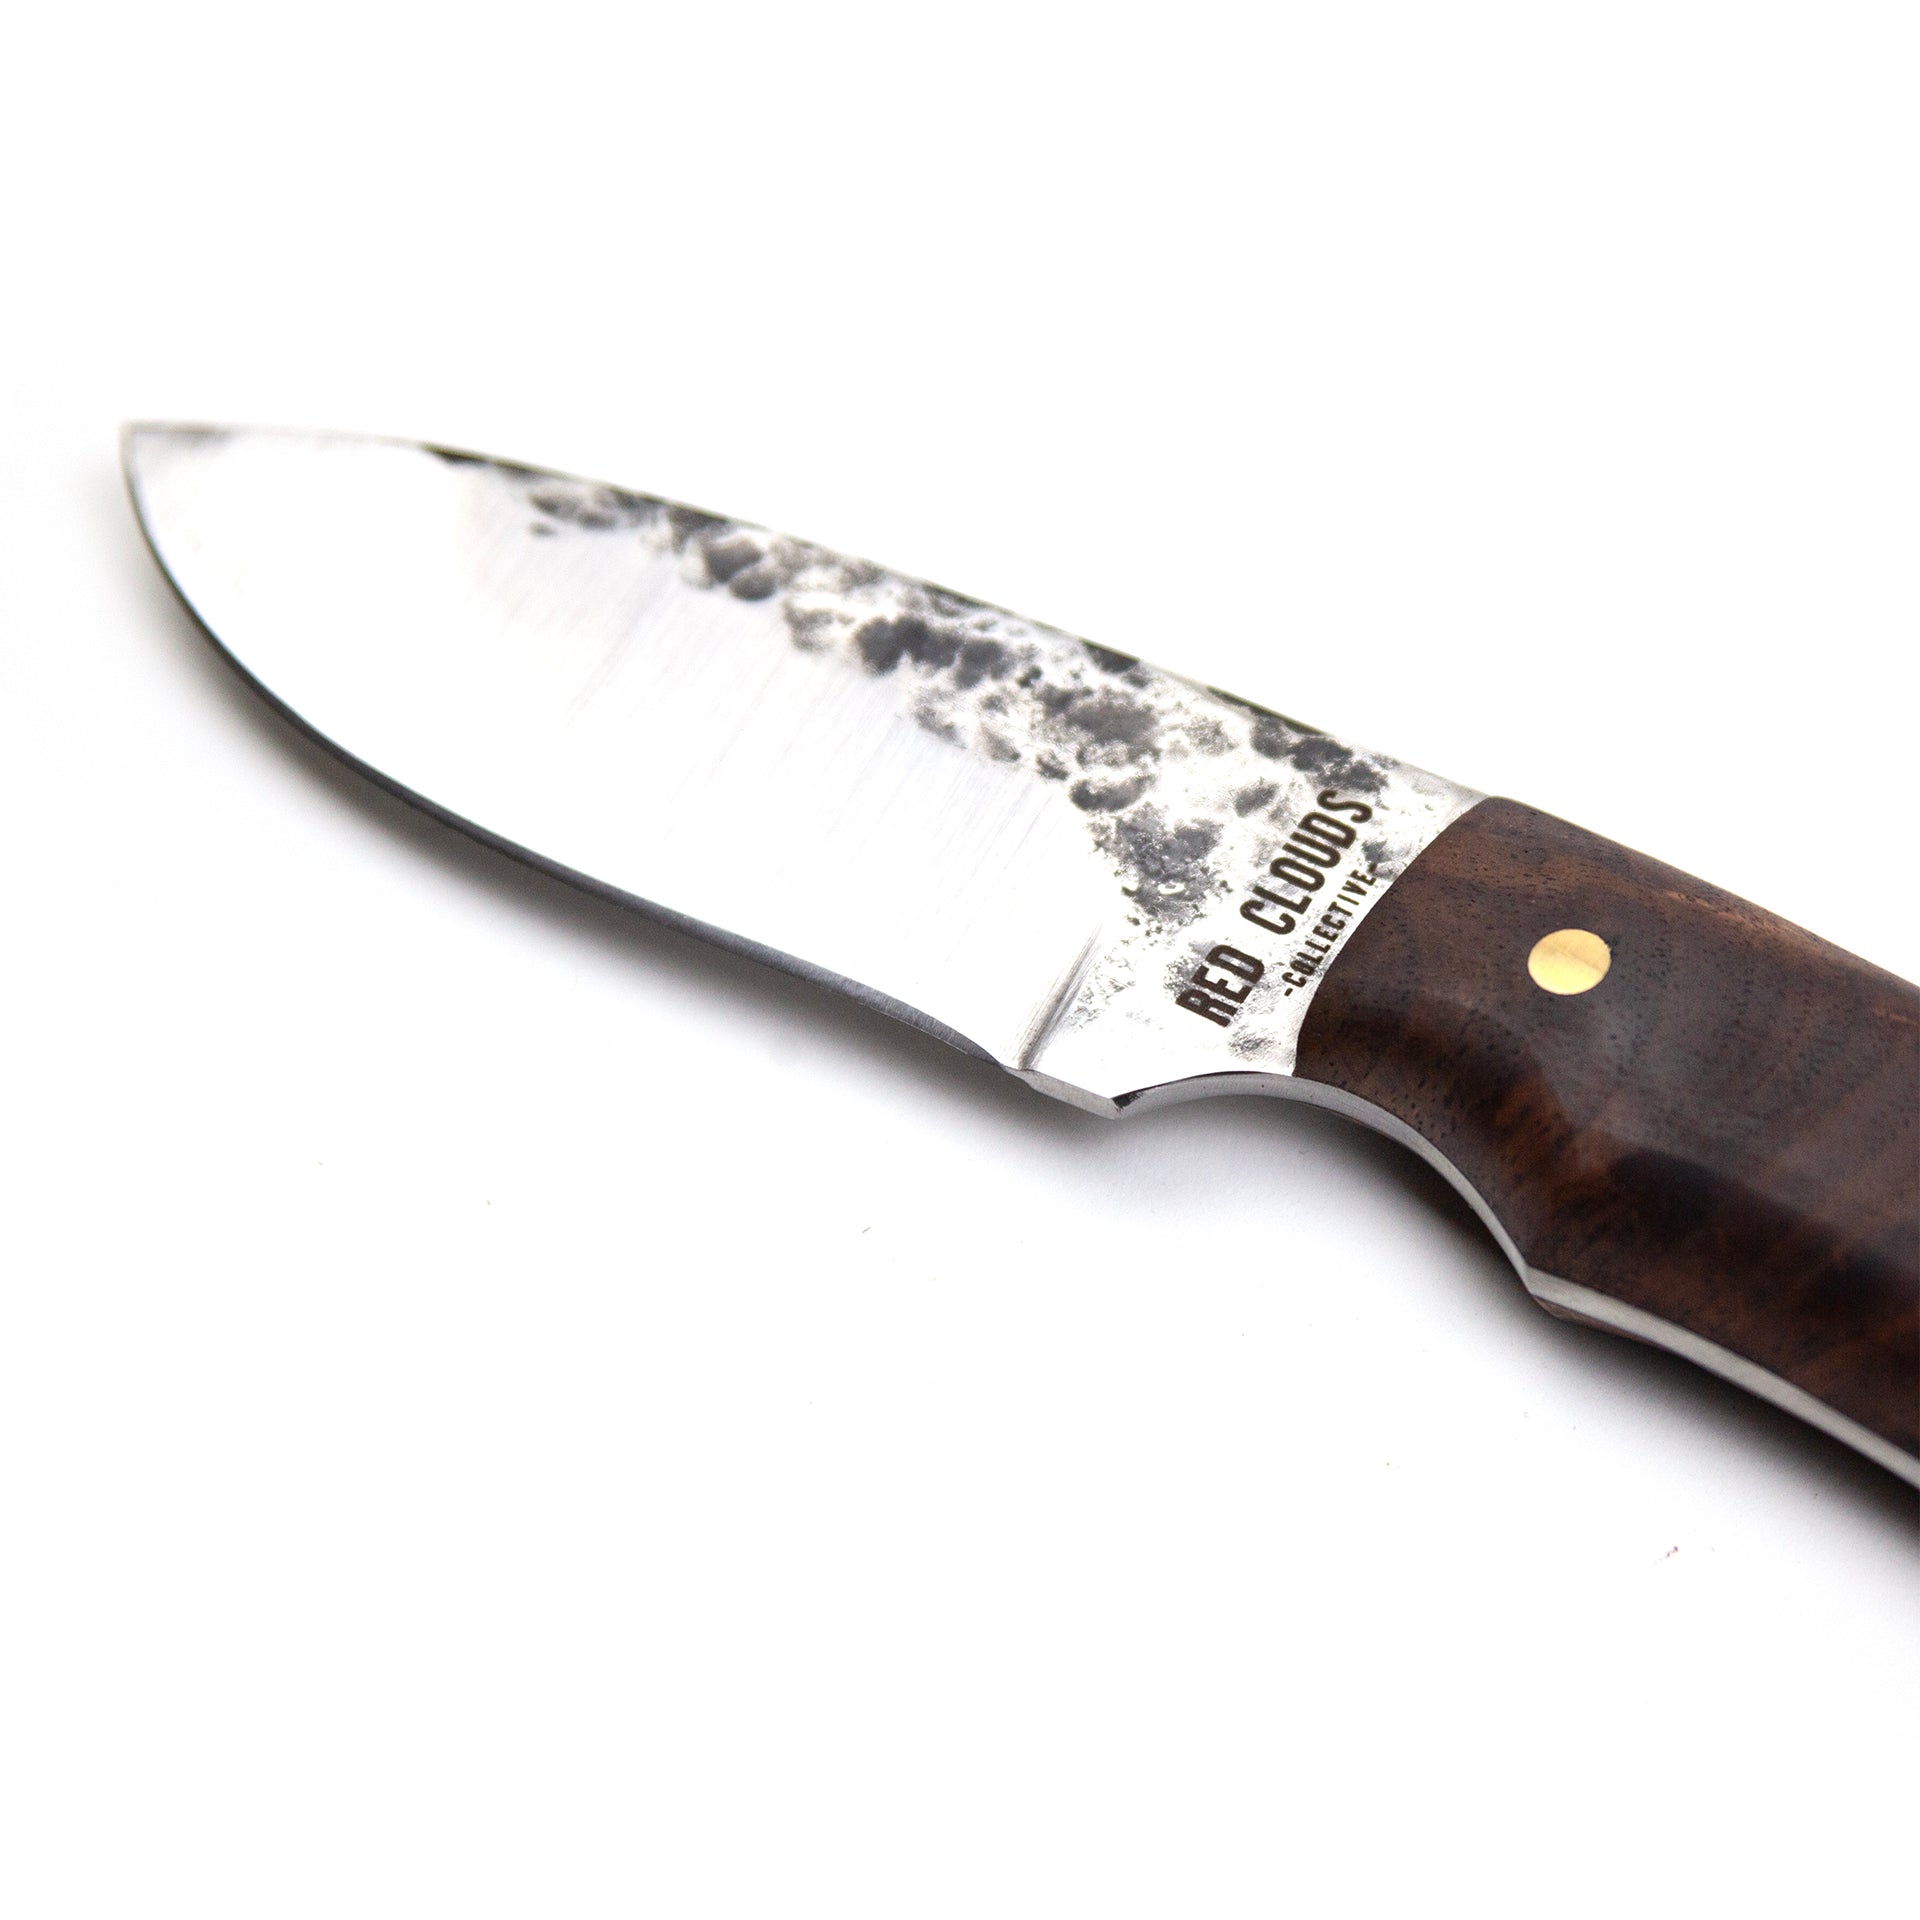 Cascade Knife and Leather Sheath